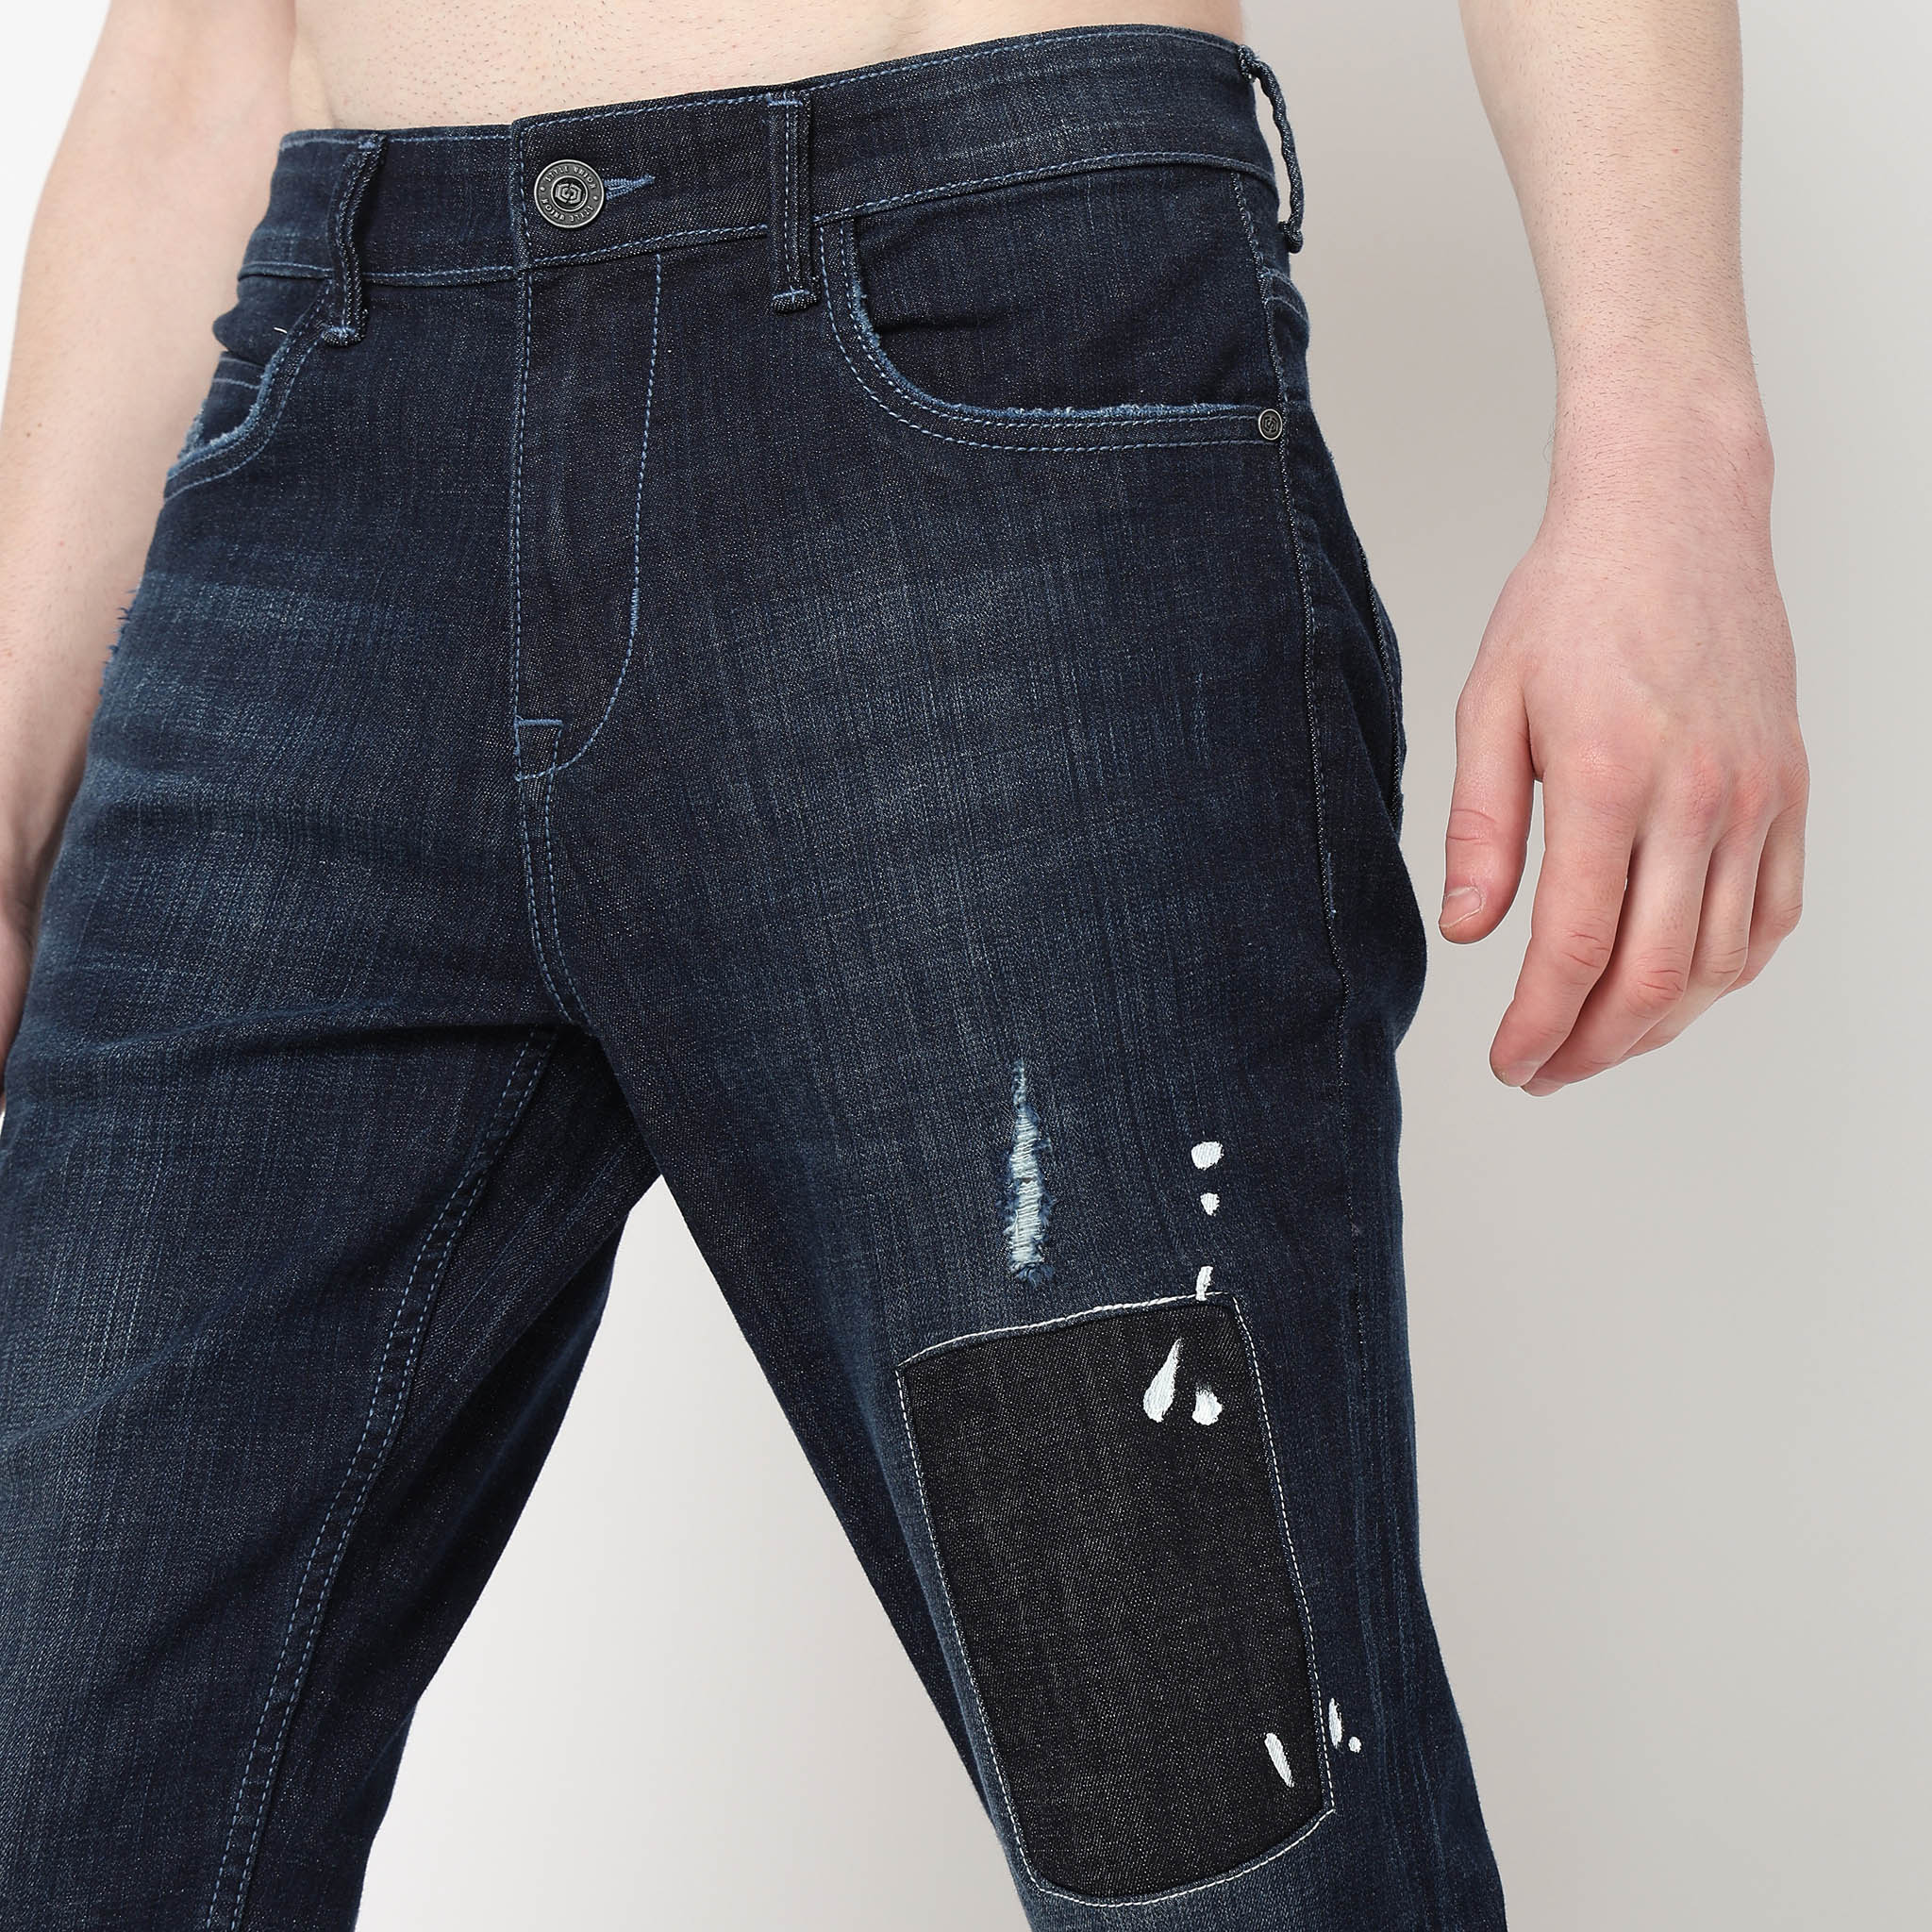 Men Wearing Regular Fit Distressed Low Rise Jean